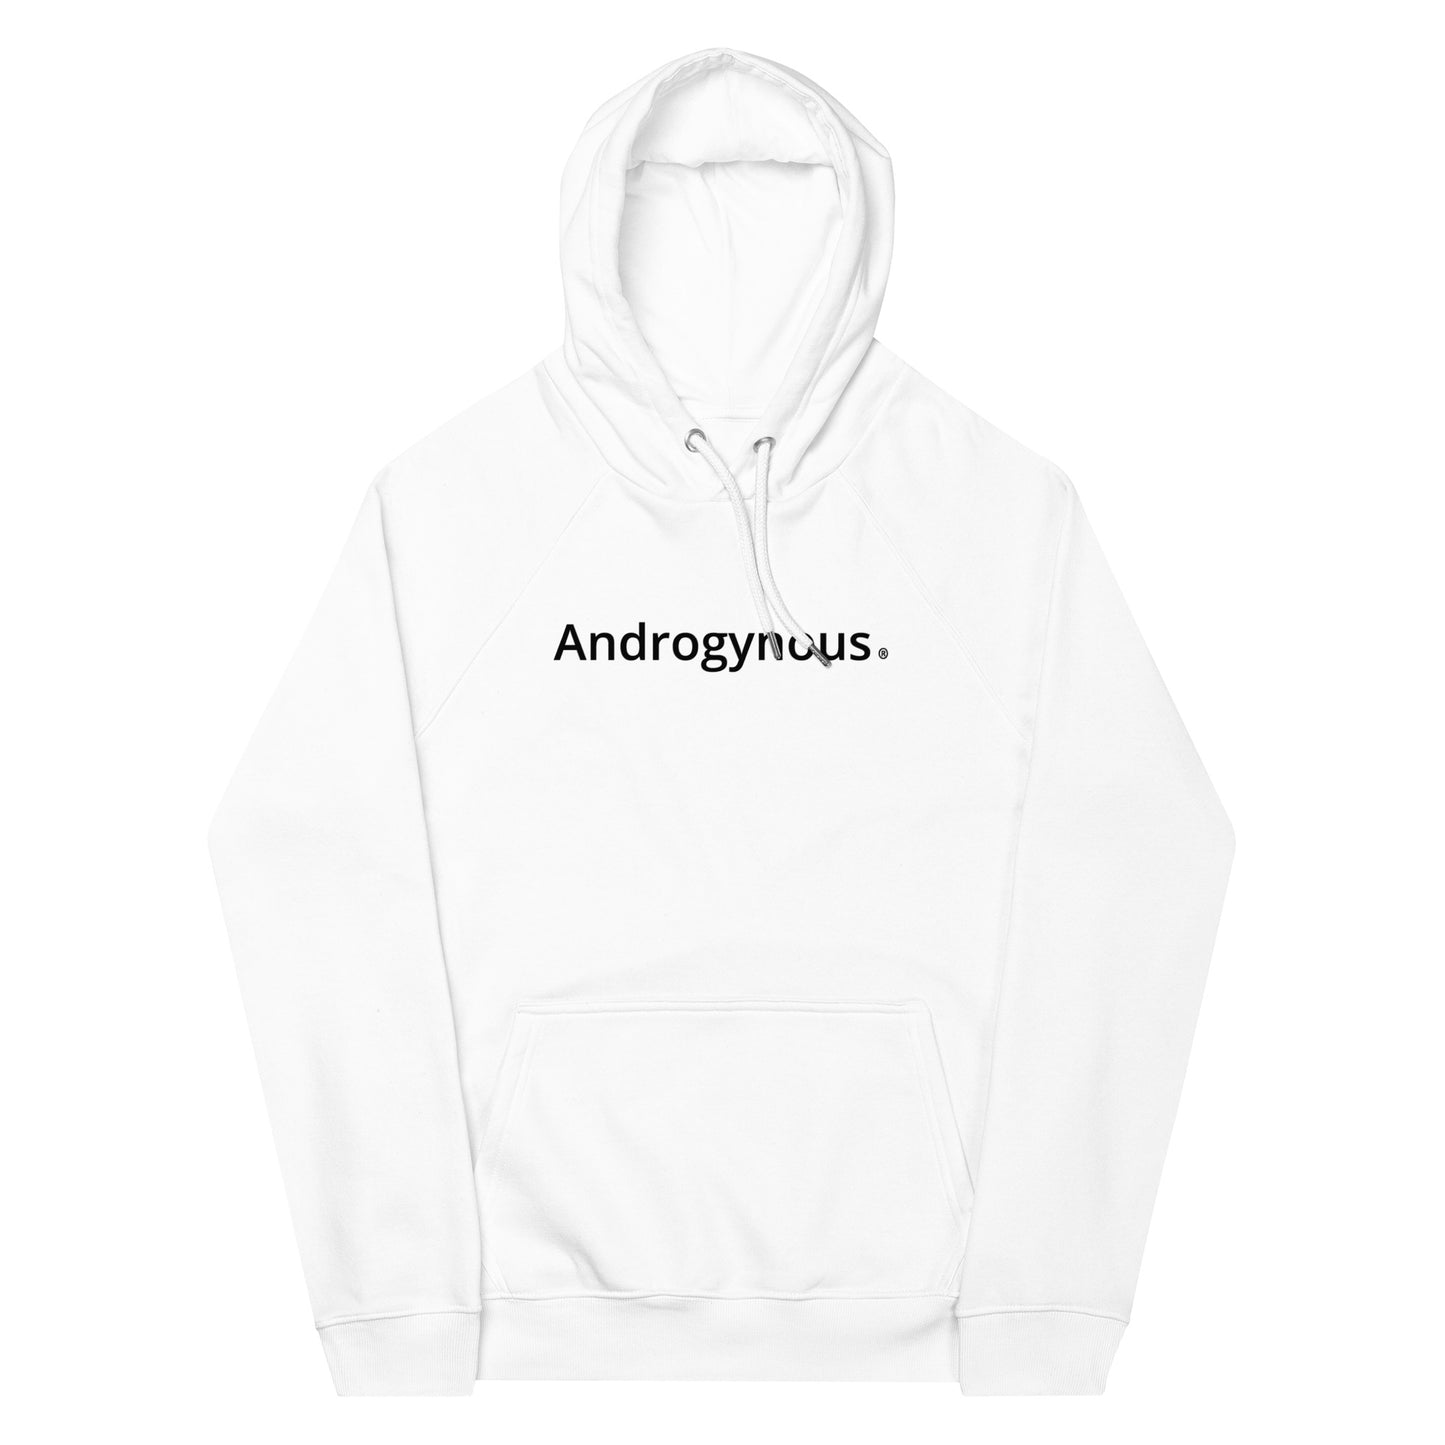 ANDROGYNOUS BLACK ON WHITE PRINTED RINGSPUN Unisex eco raglan hoodie